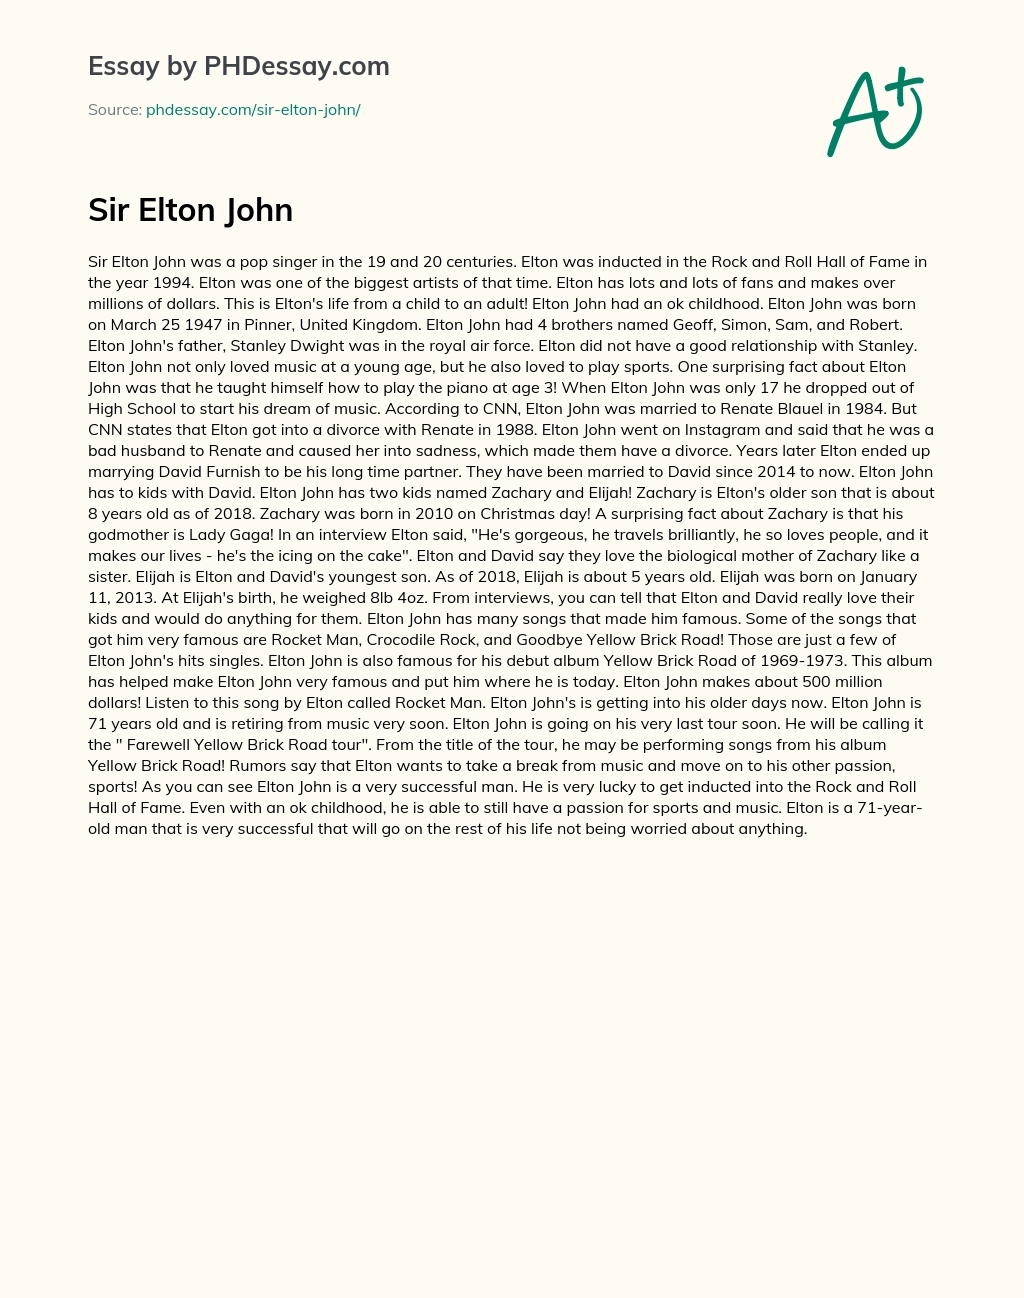 Sir Elton John essay